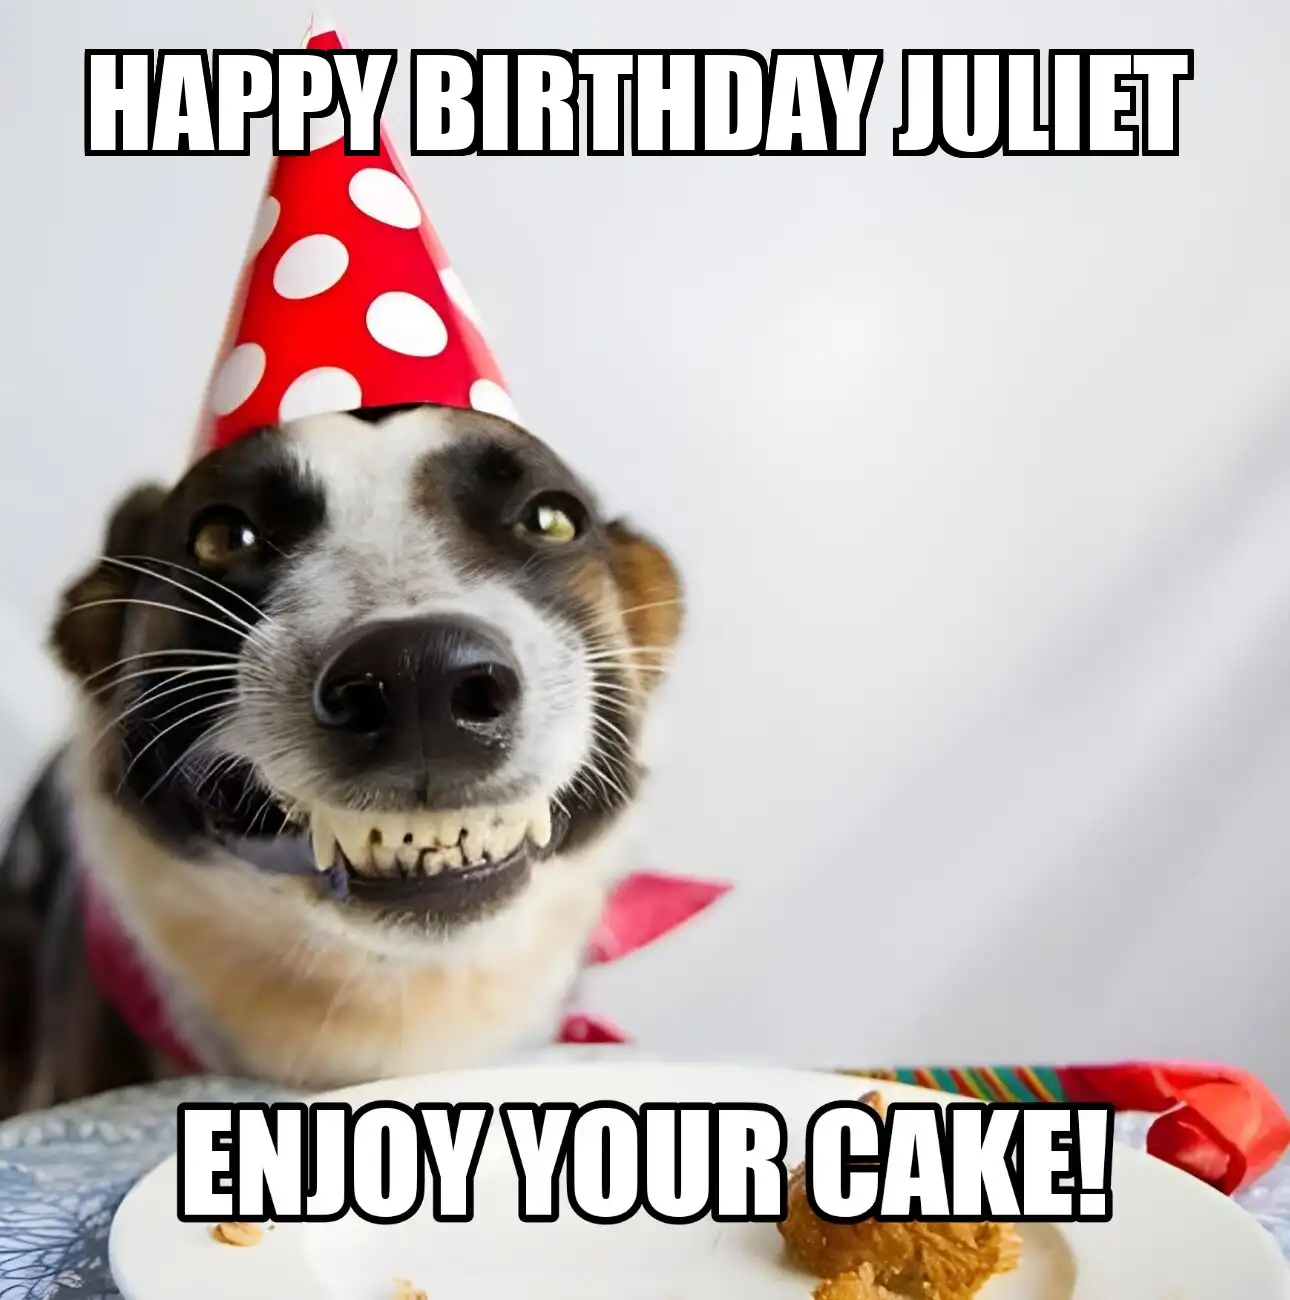 Happy Birthday Juliet Enjoy Your Cake Dog Meme